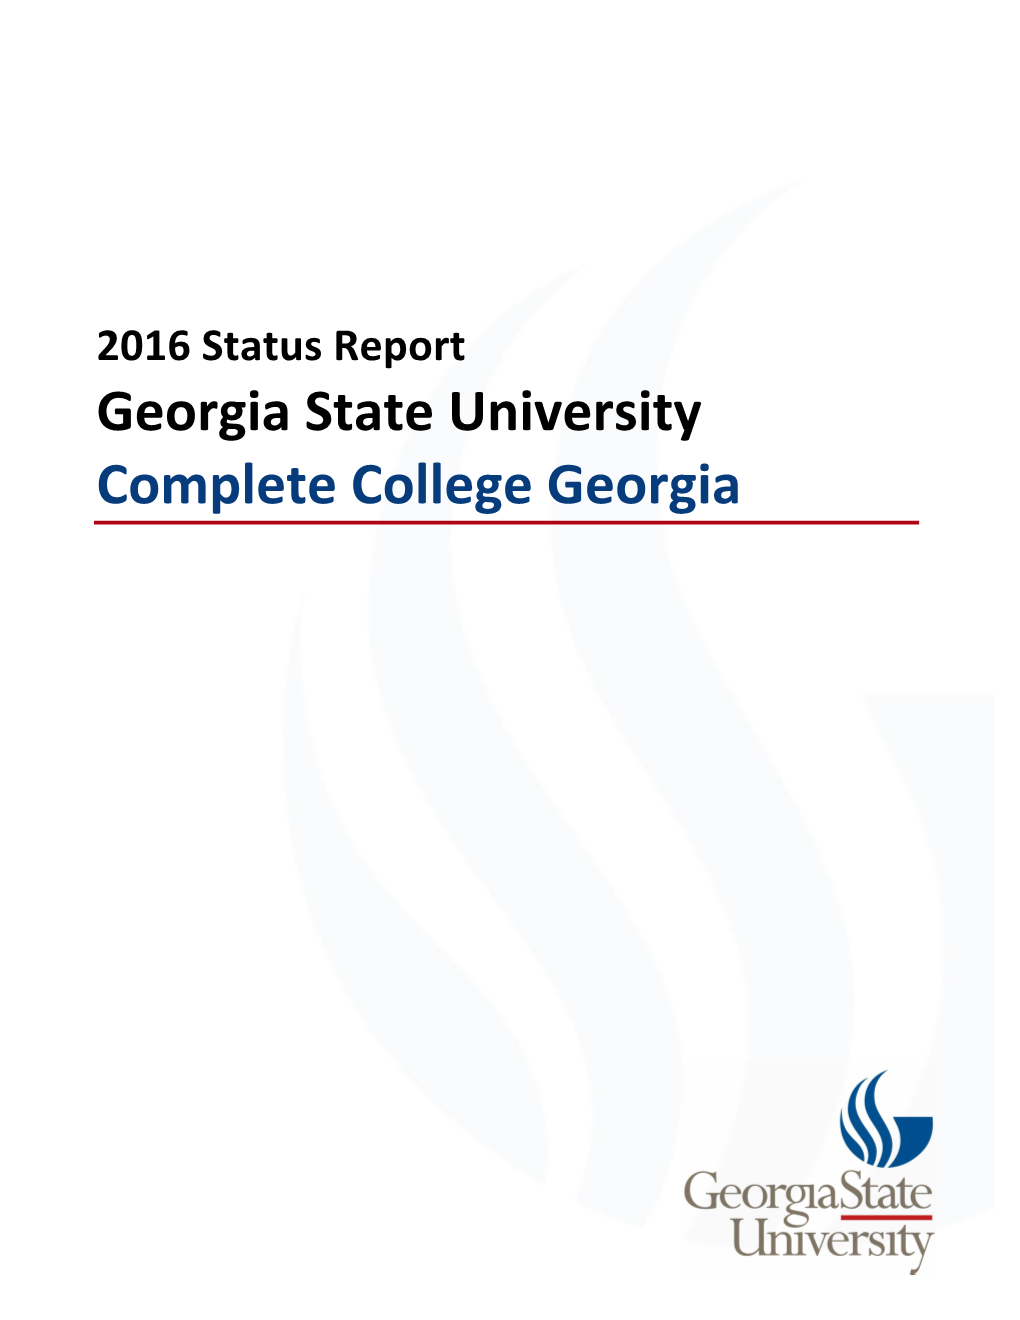 Georgia State University Complete College Georgia